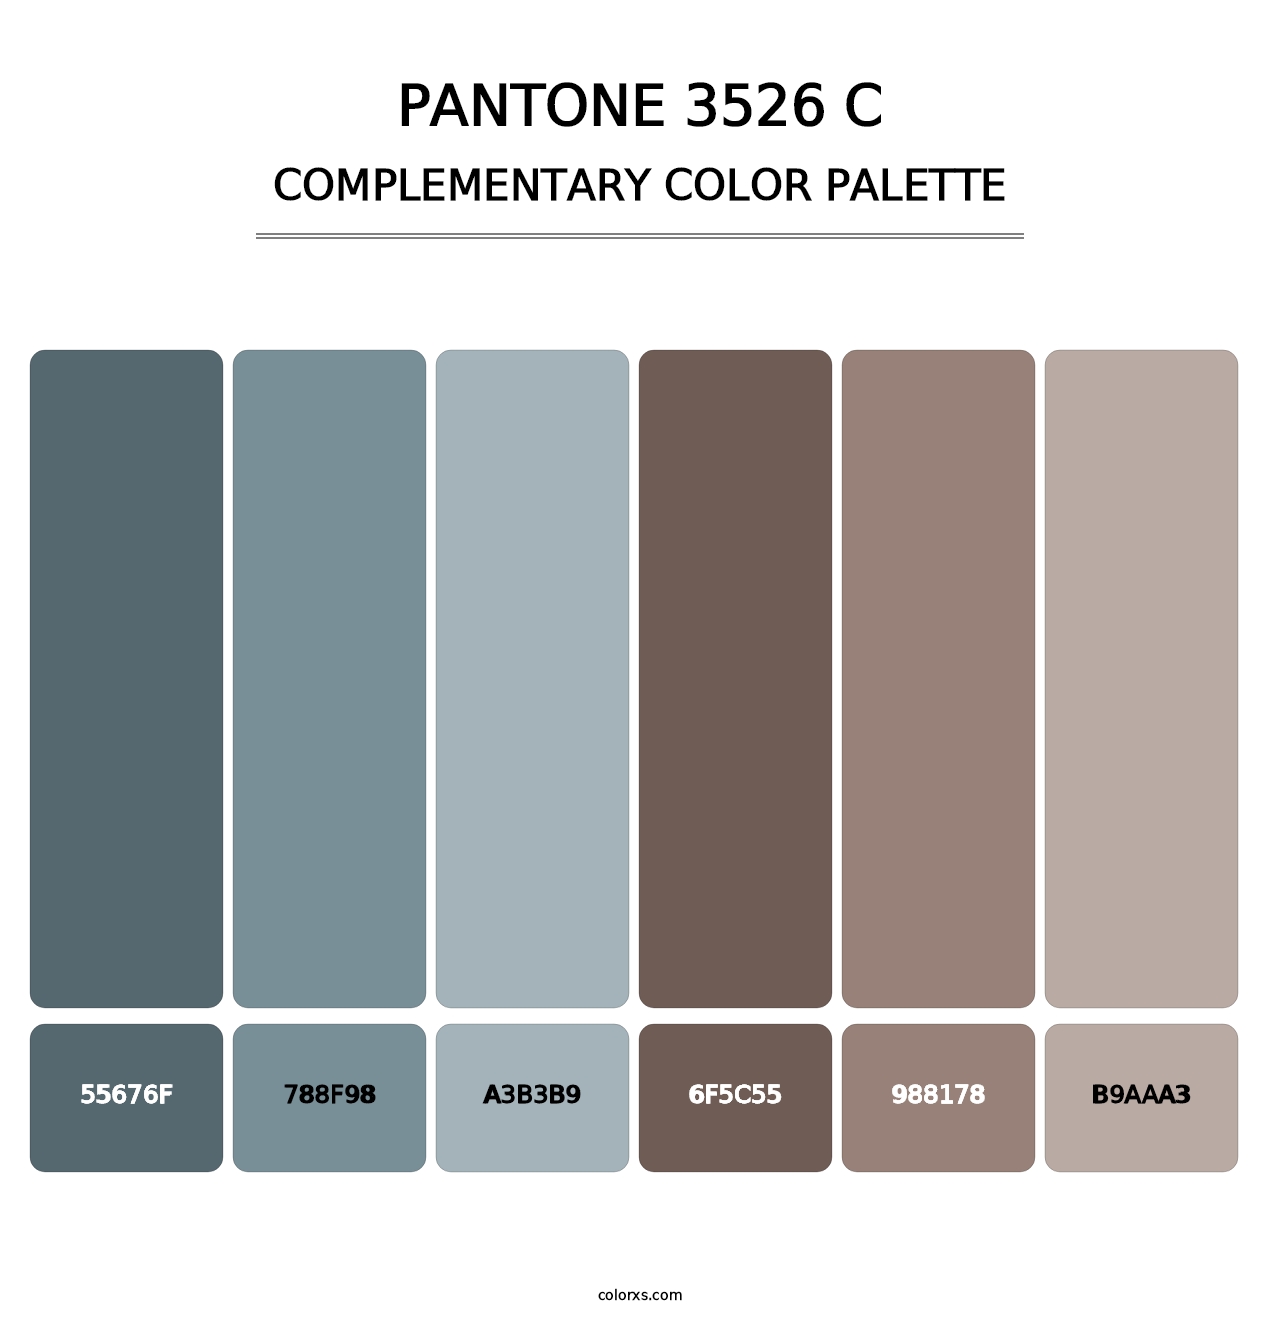 PANTONE 3526 C - Complementary Color Palette